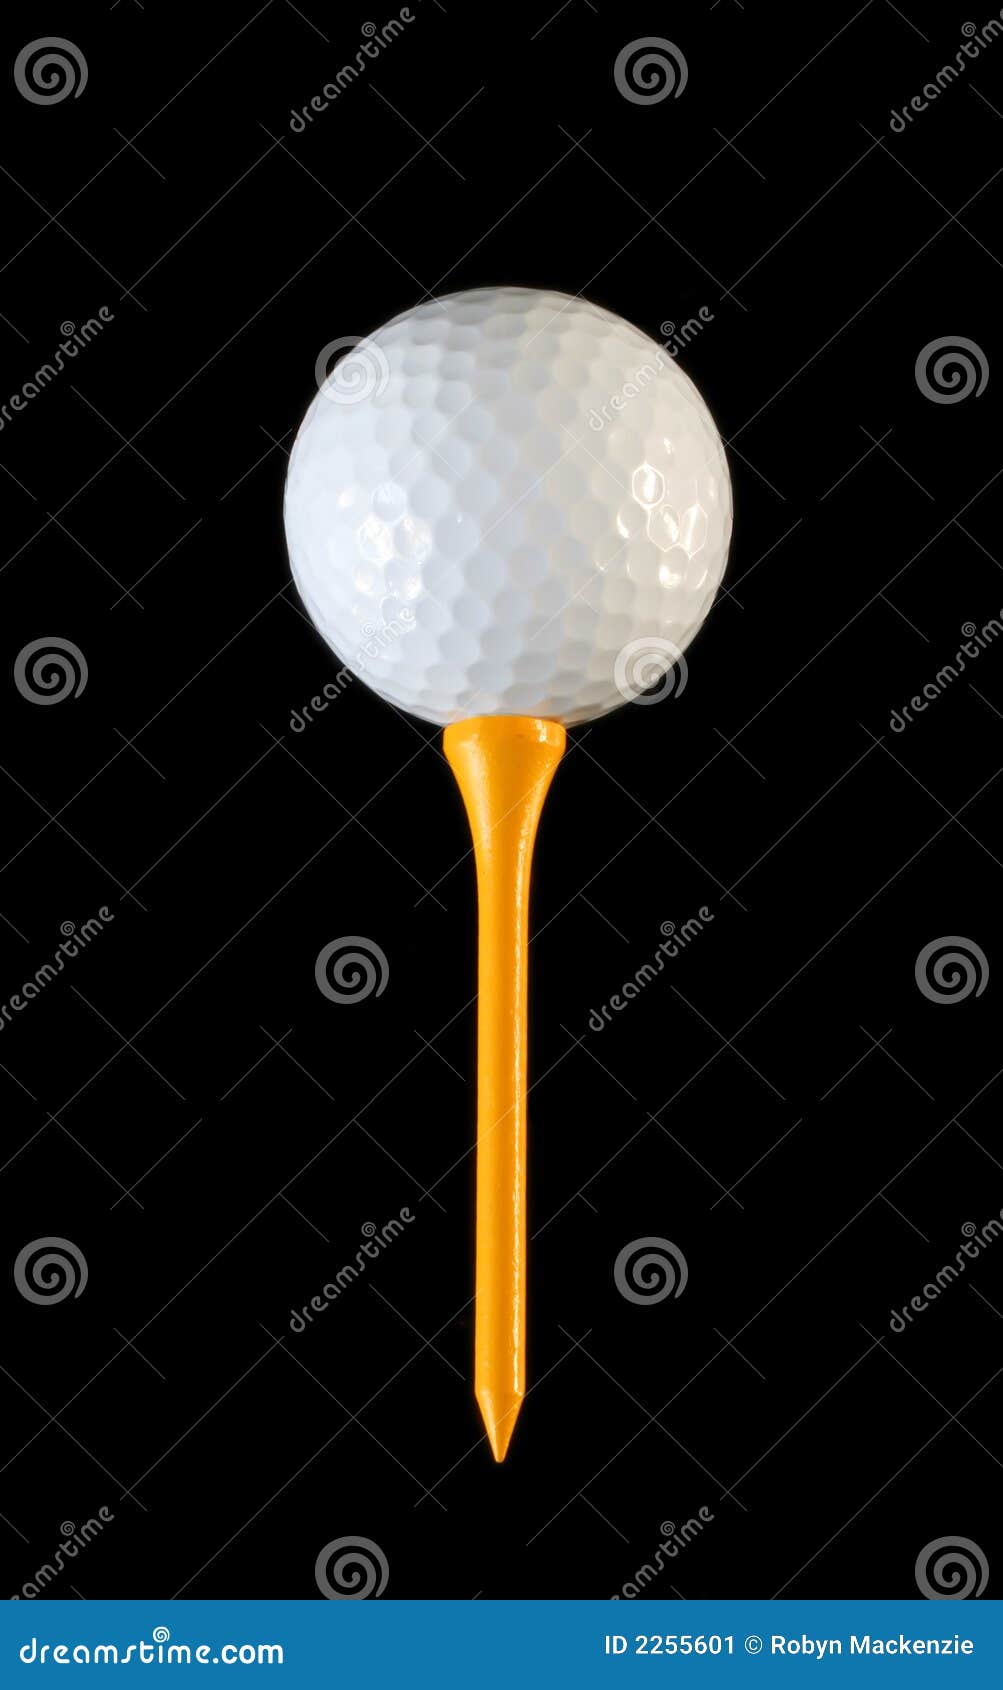 golf ball on yellow tee